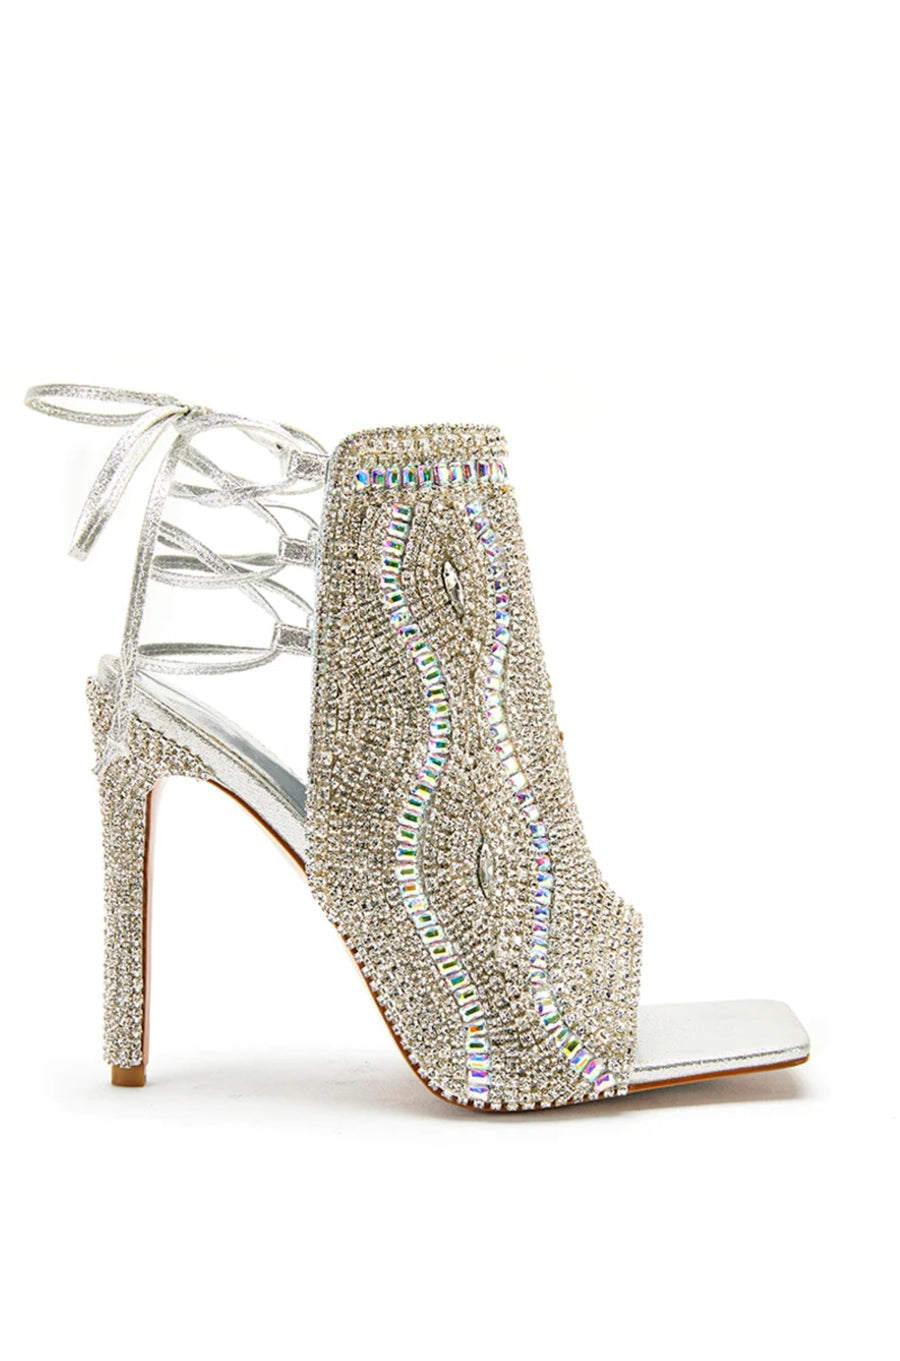 Rhinestone embellished silver crystal open toe stiletto heels